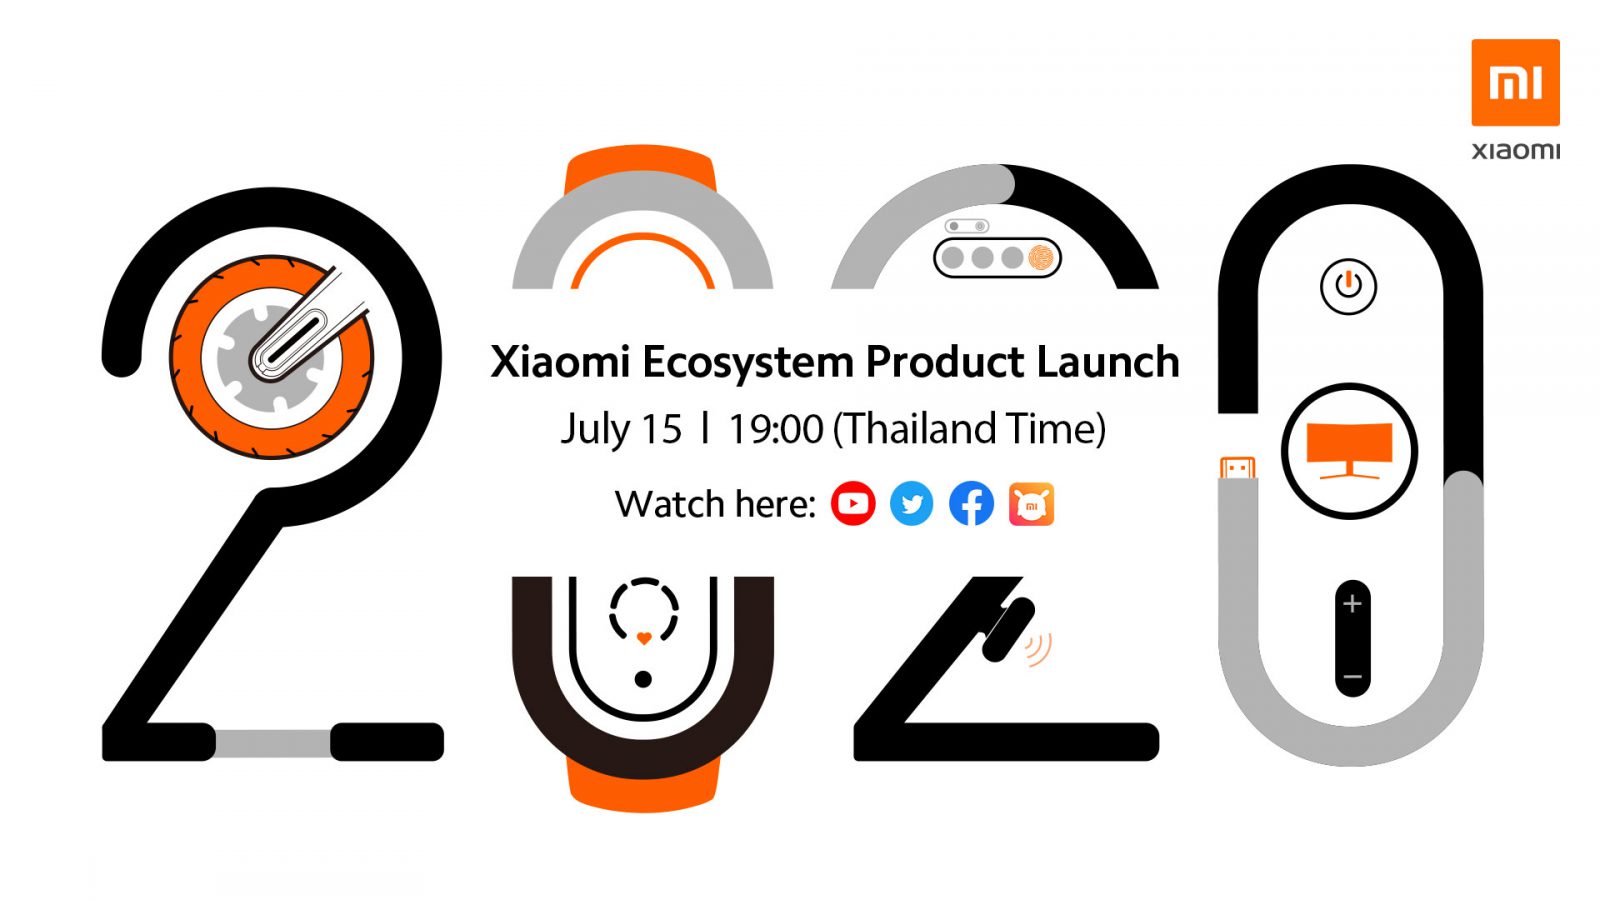 Xiaomi Ecosystem Product Launch Event | Xiaomi | เตรียมพบ การเปิดตัวสุดยอดนวัตกรรมแห่งปี 2020 ในงาน “Xiaomi Ecosystem Product Launch Event” วันที่ 15 กรกฎาคมนี้ เวลา 19:00 น.